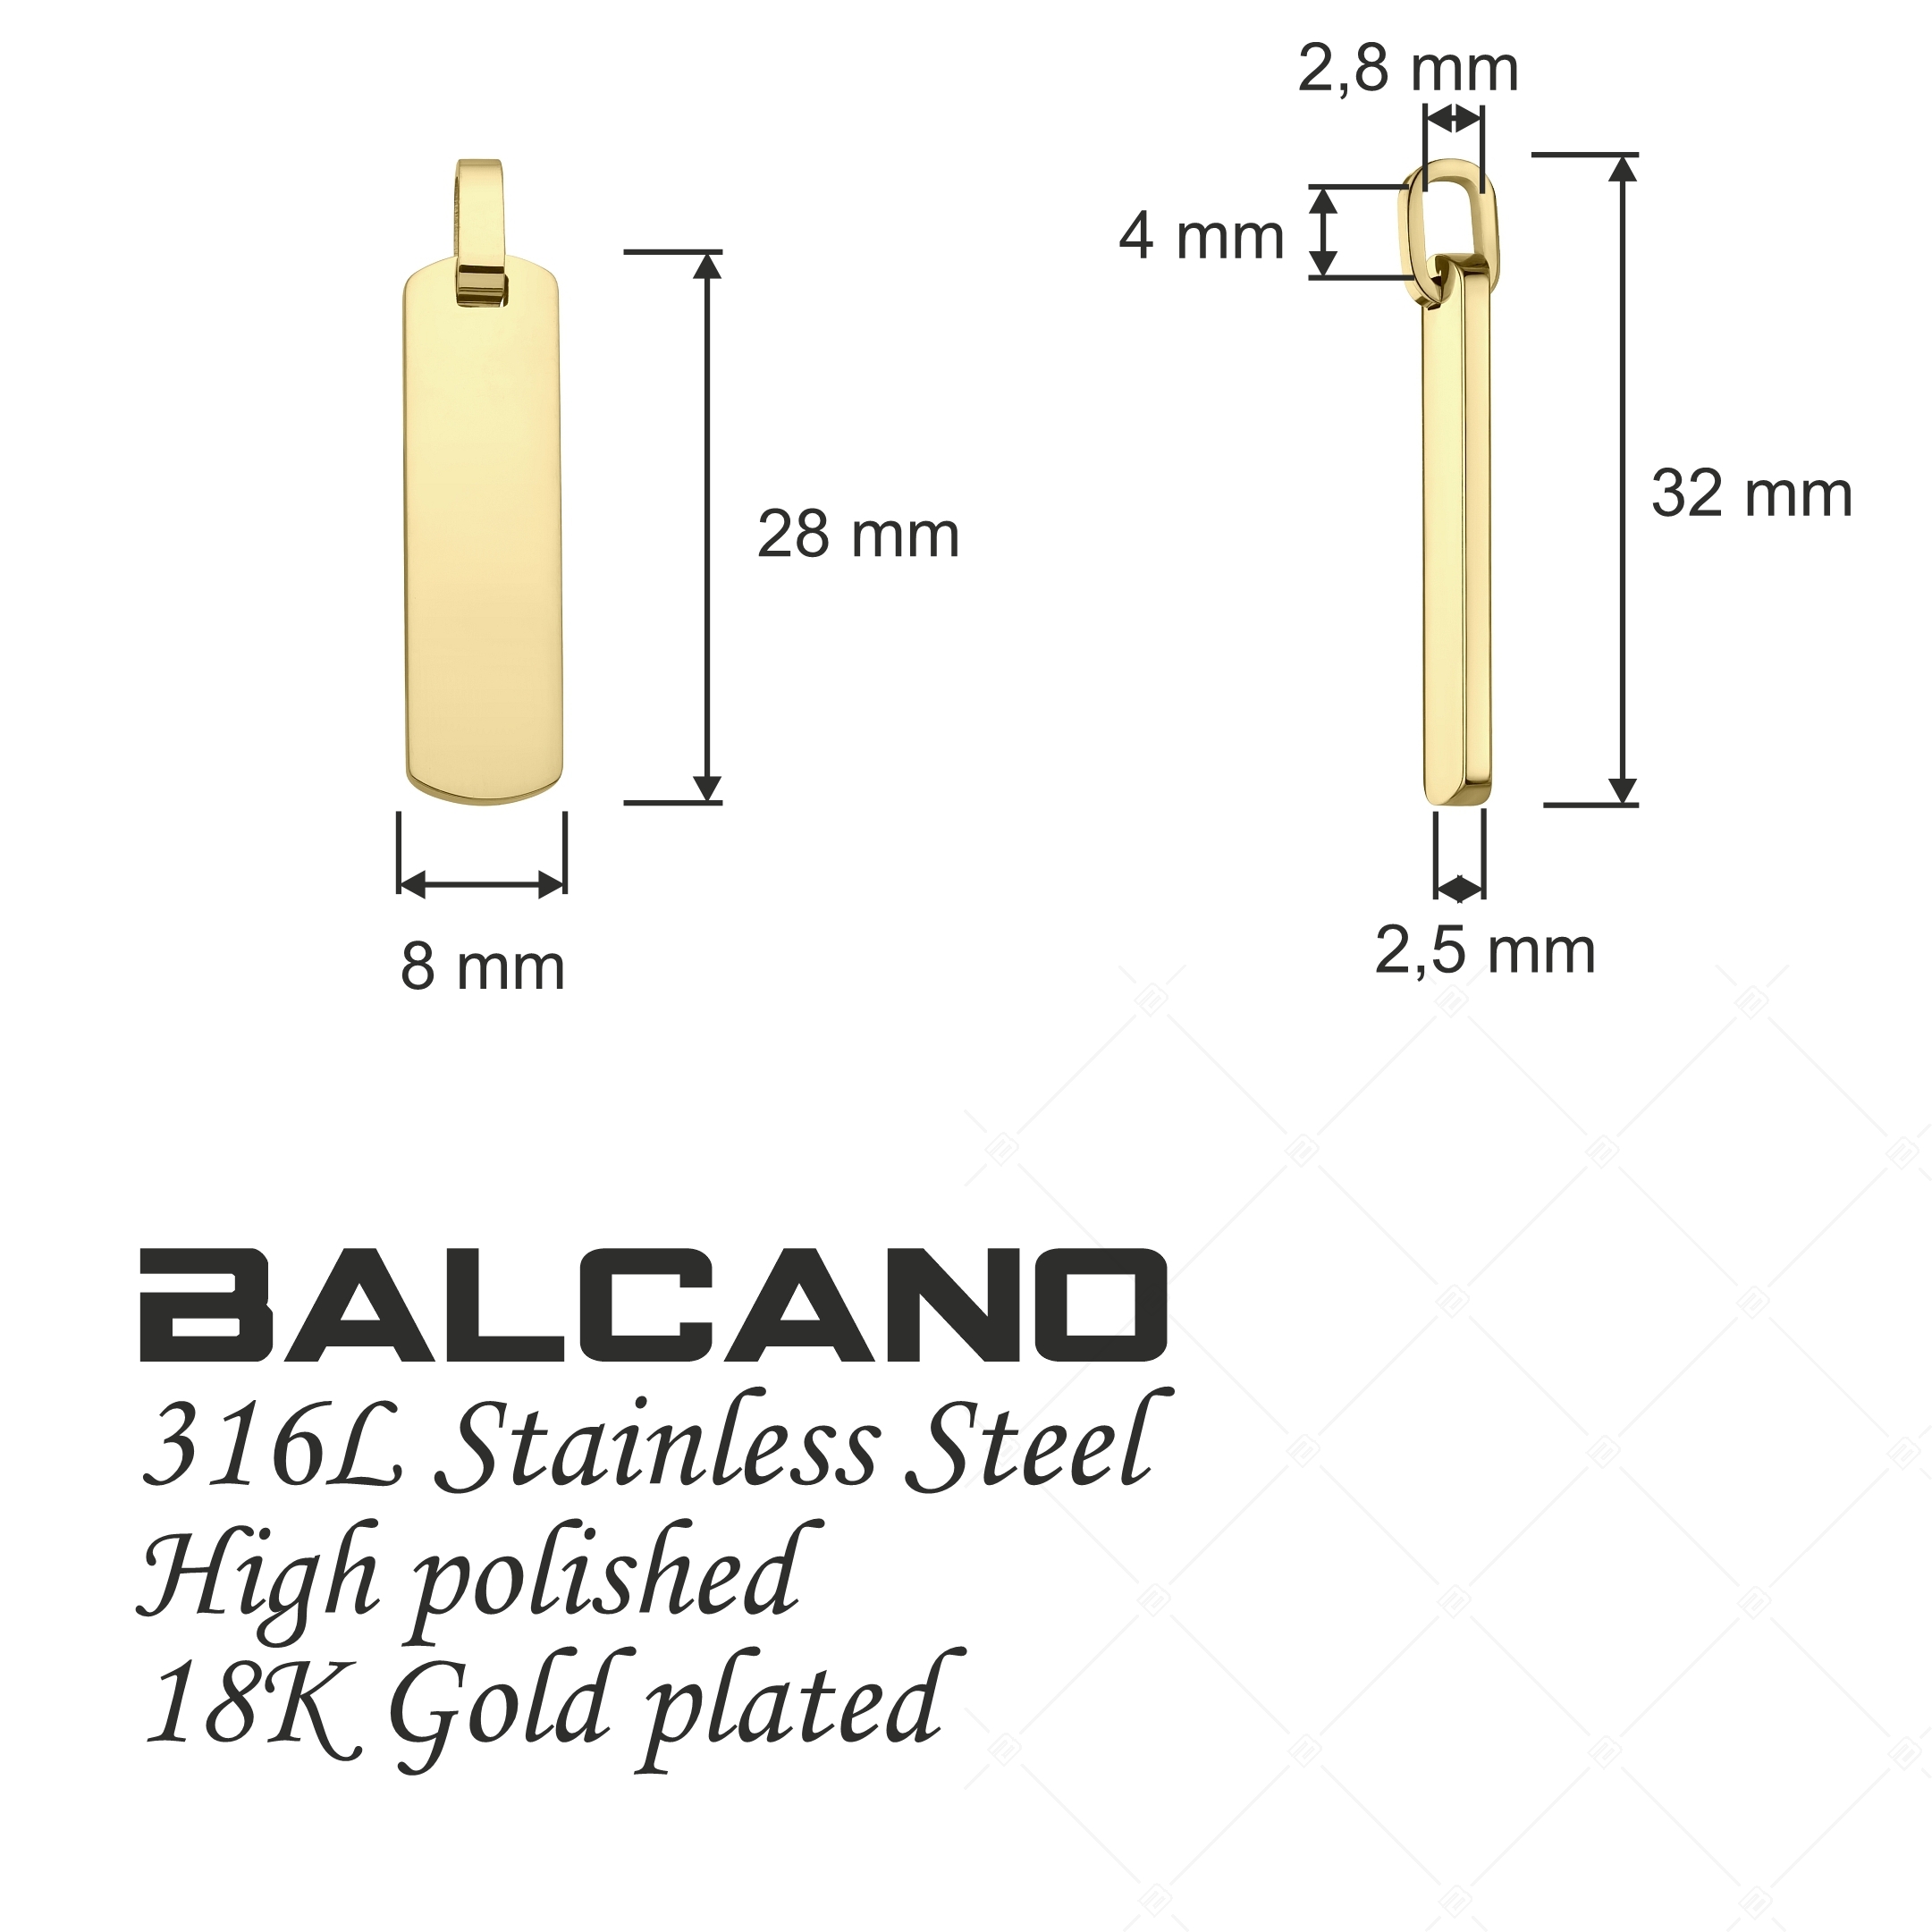 BALCANO - Steve / Gravierbarer Edelstahl-Anhänger mit 18K Gold Beschichtung (242105BC88)